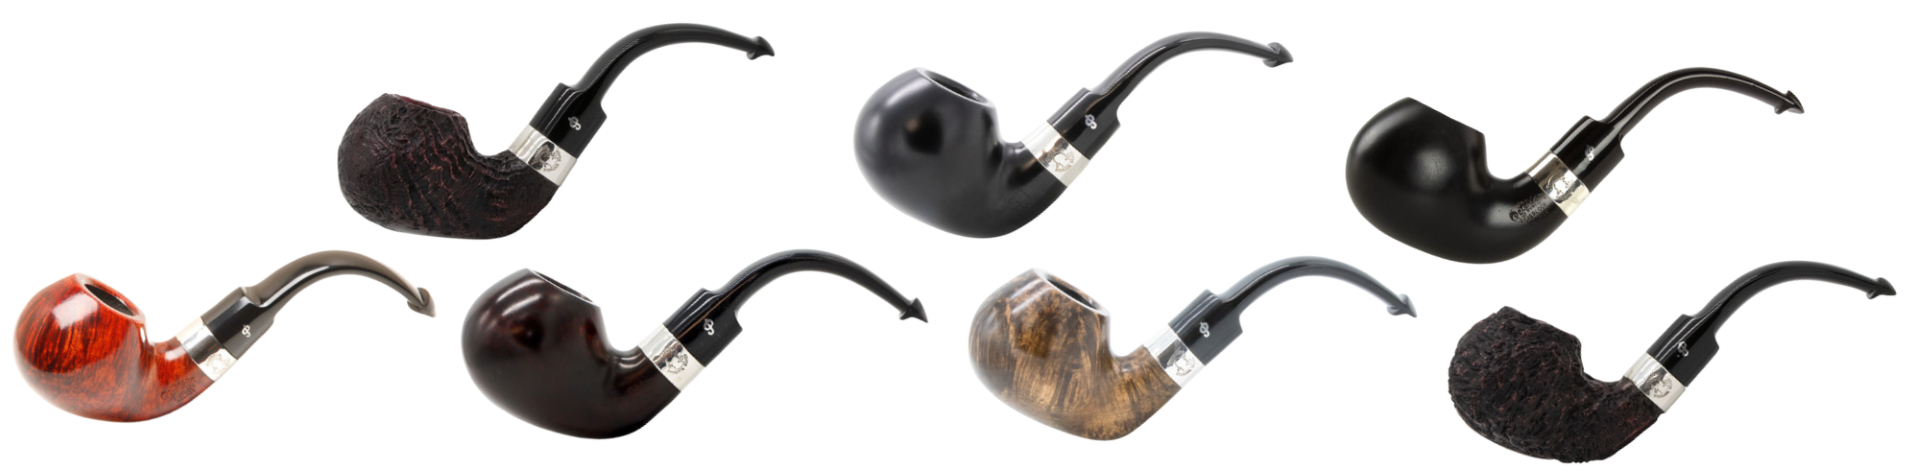 Peterson Sherlock Holmes Lestrade Tobacco Pipe